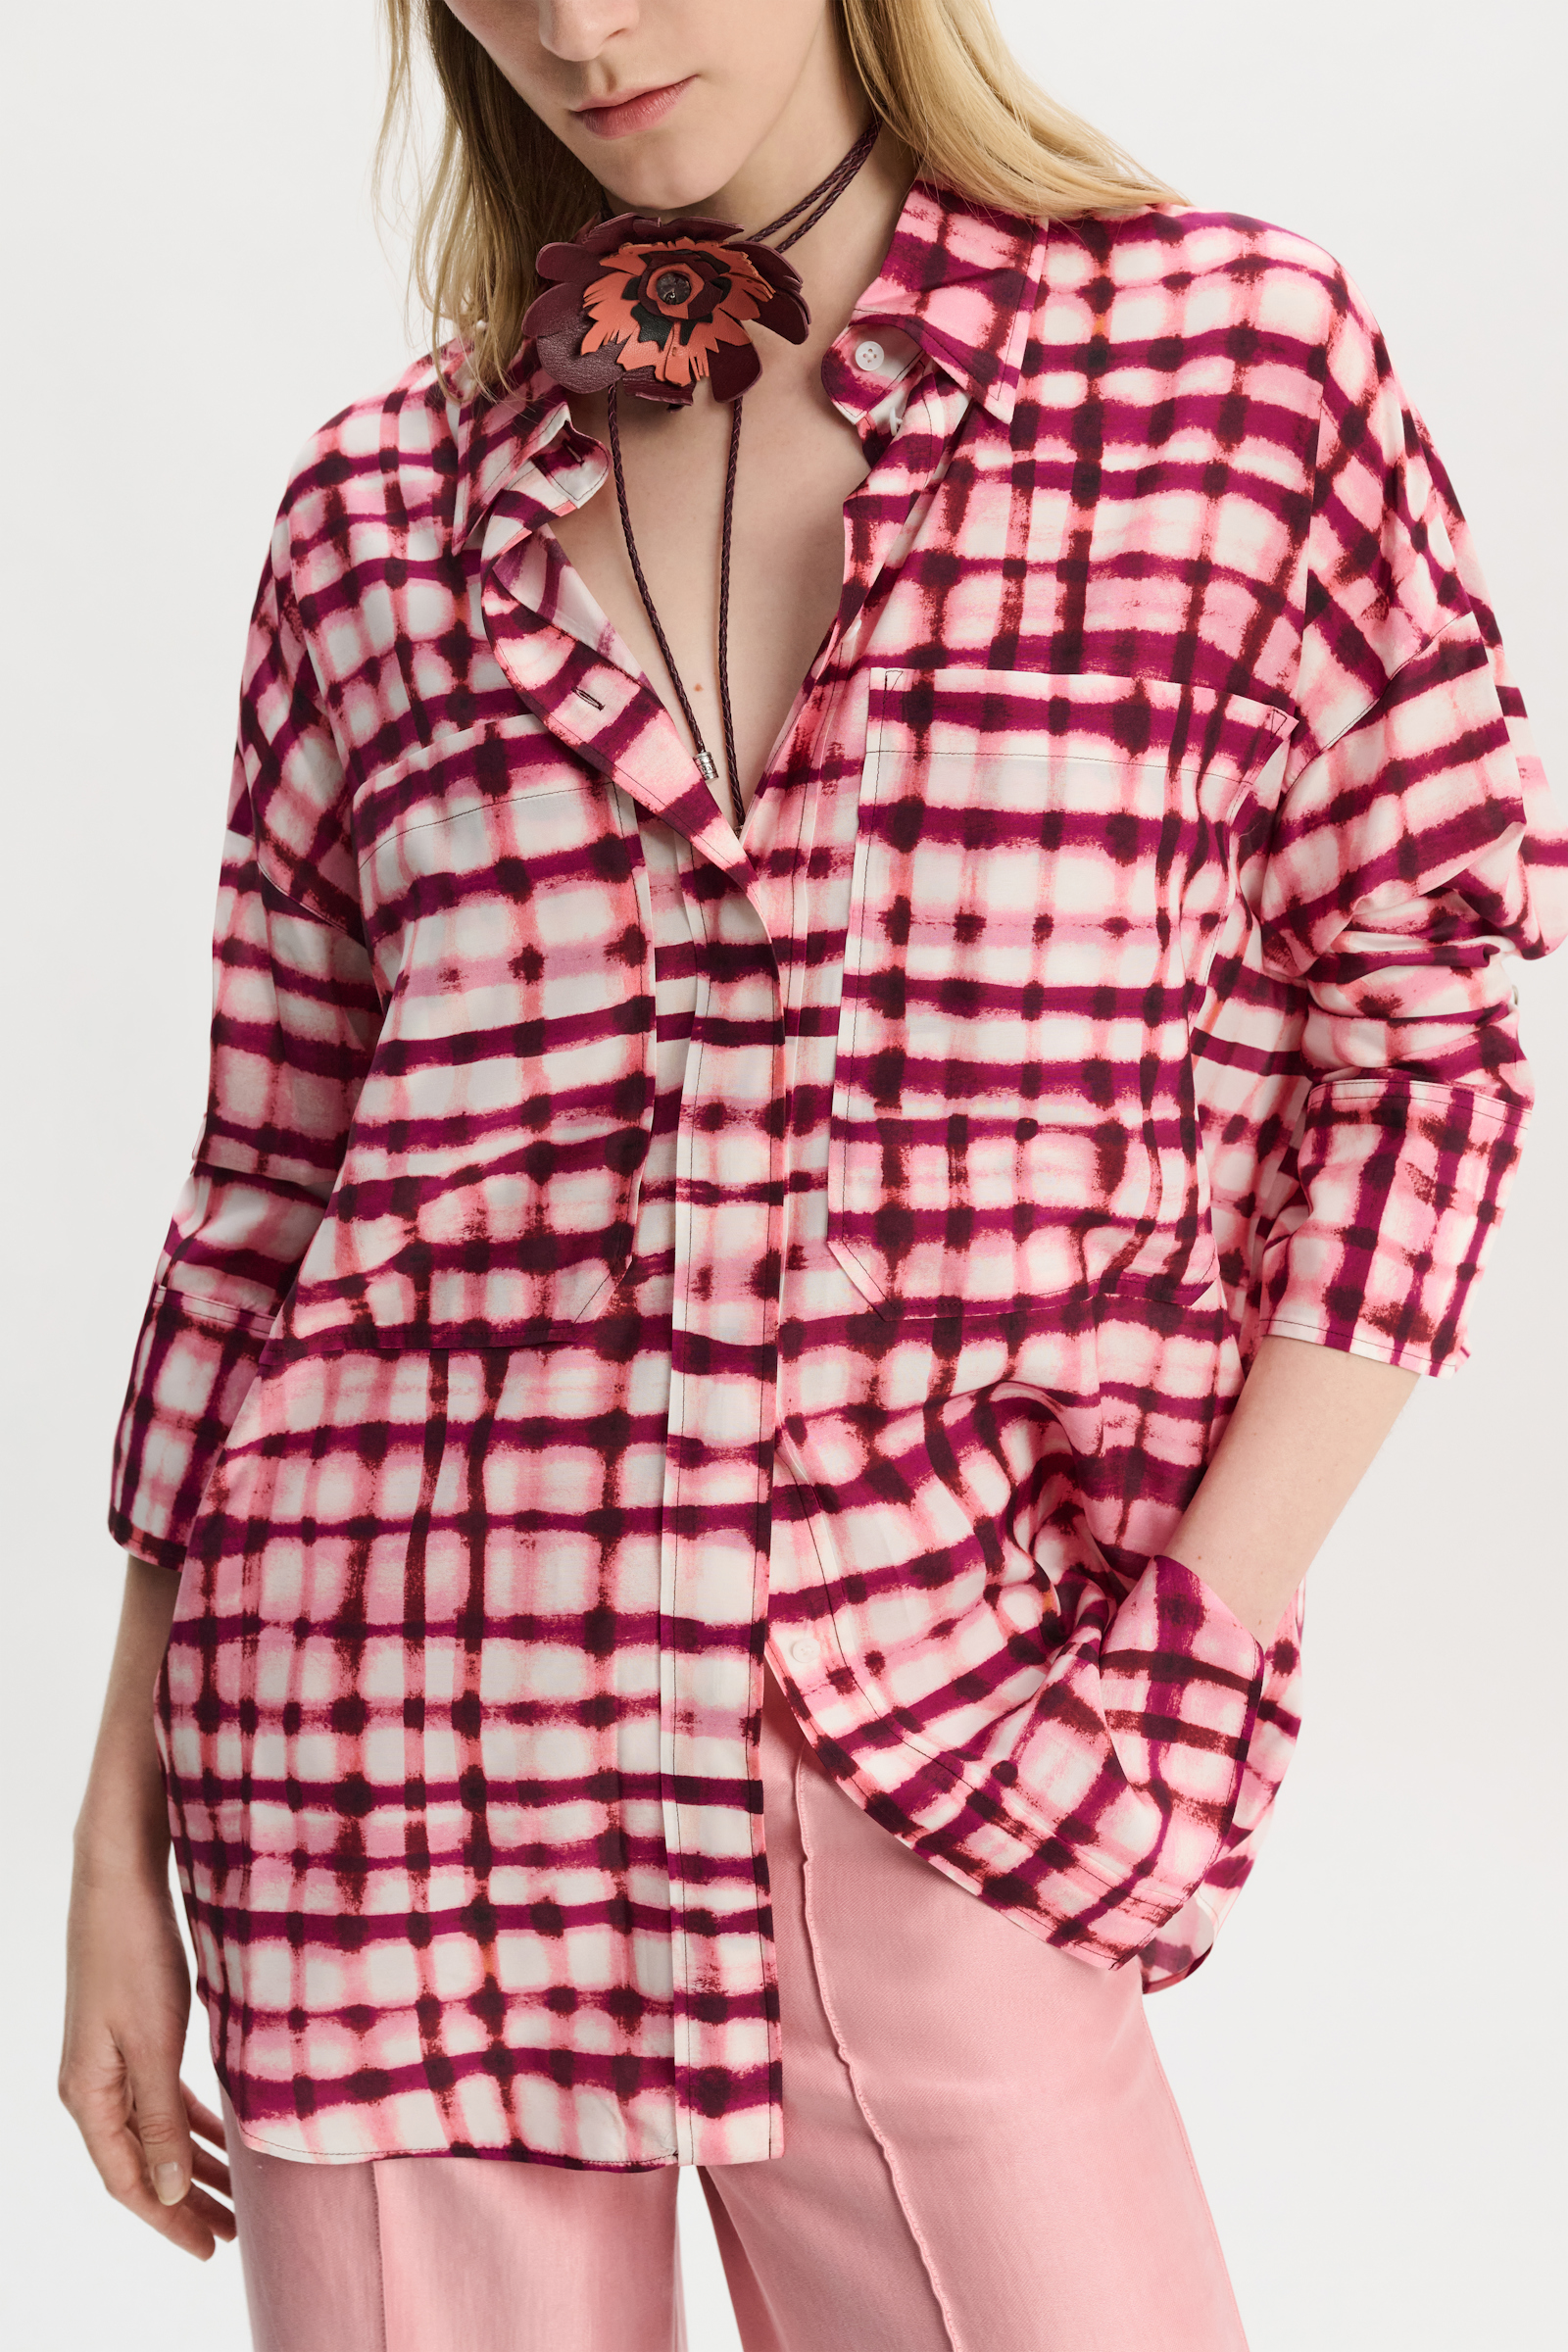 Dorothee Schumacher Silk-viscose plaid oversized shirt pink check mix